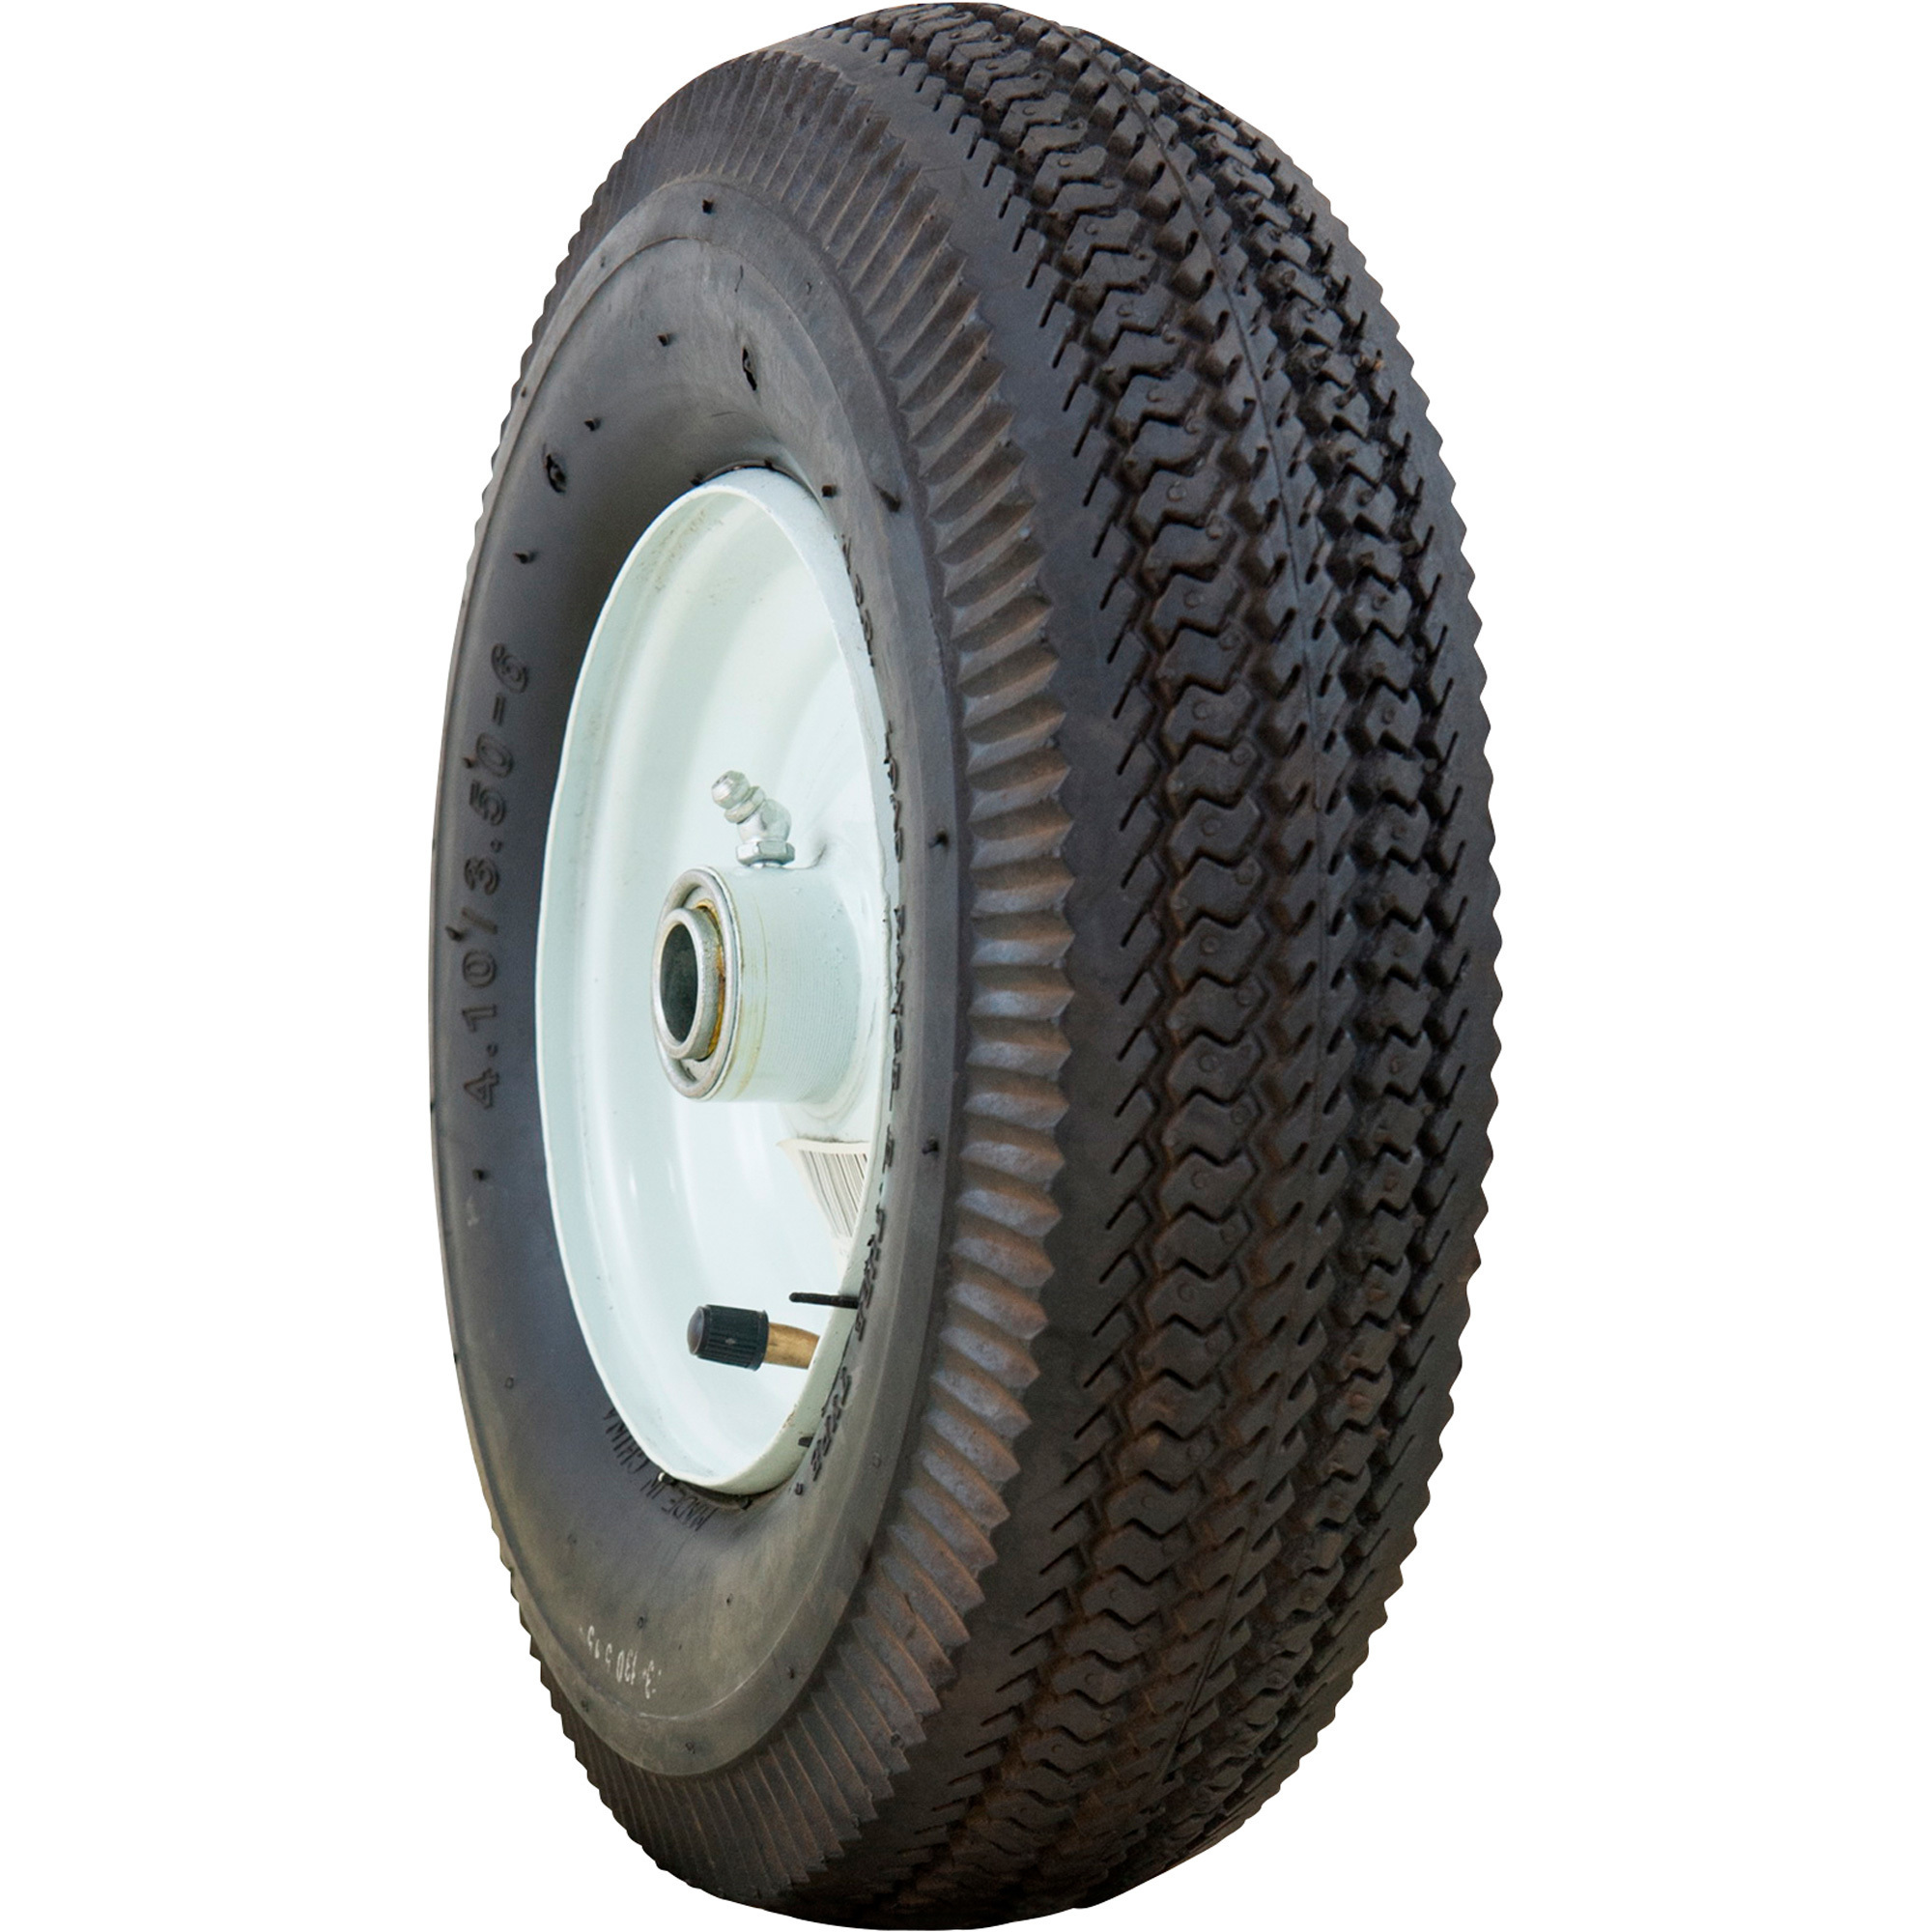 CT1008 Hi-Run Tires WHEELBARROW TIRE 4.80/4.00-8 4 PLY STUD